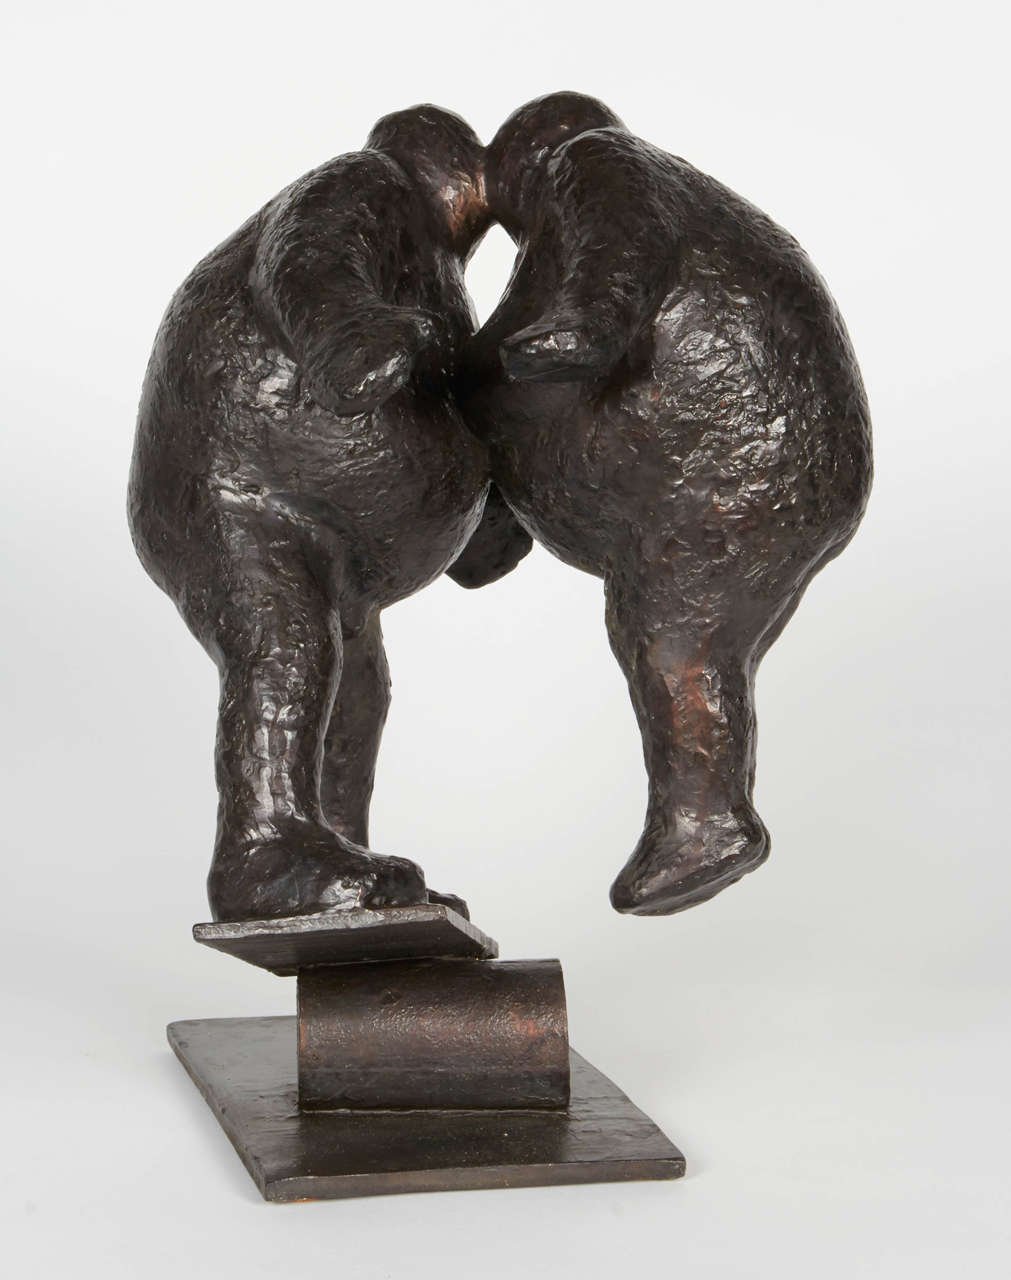 Danish Bronze Sculpture by Keld Moseholm